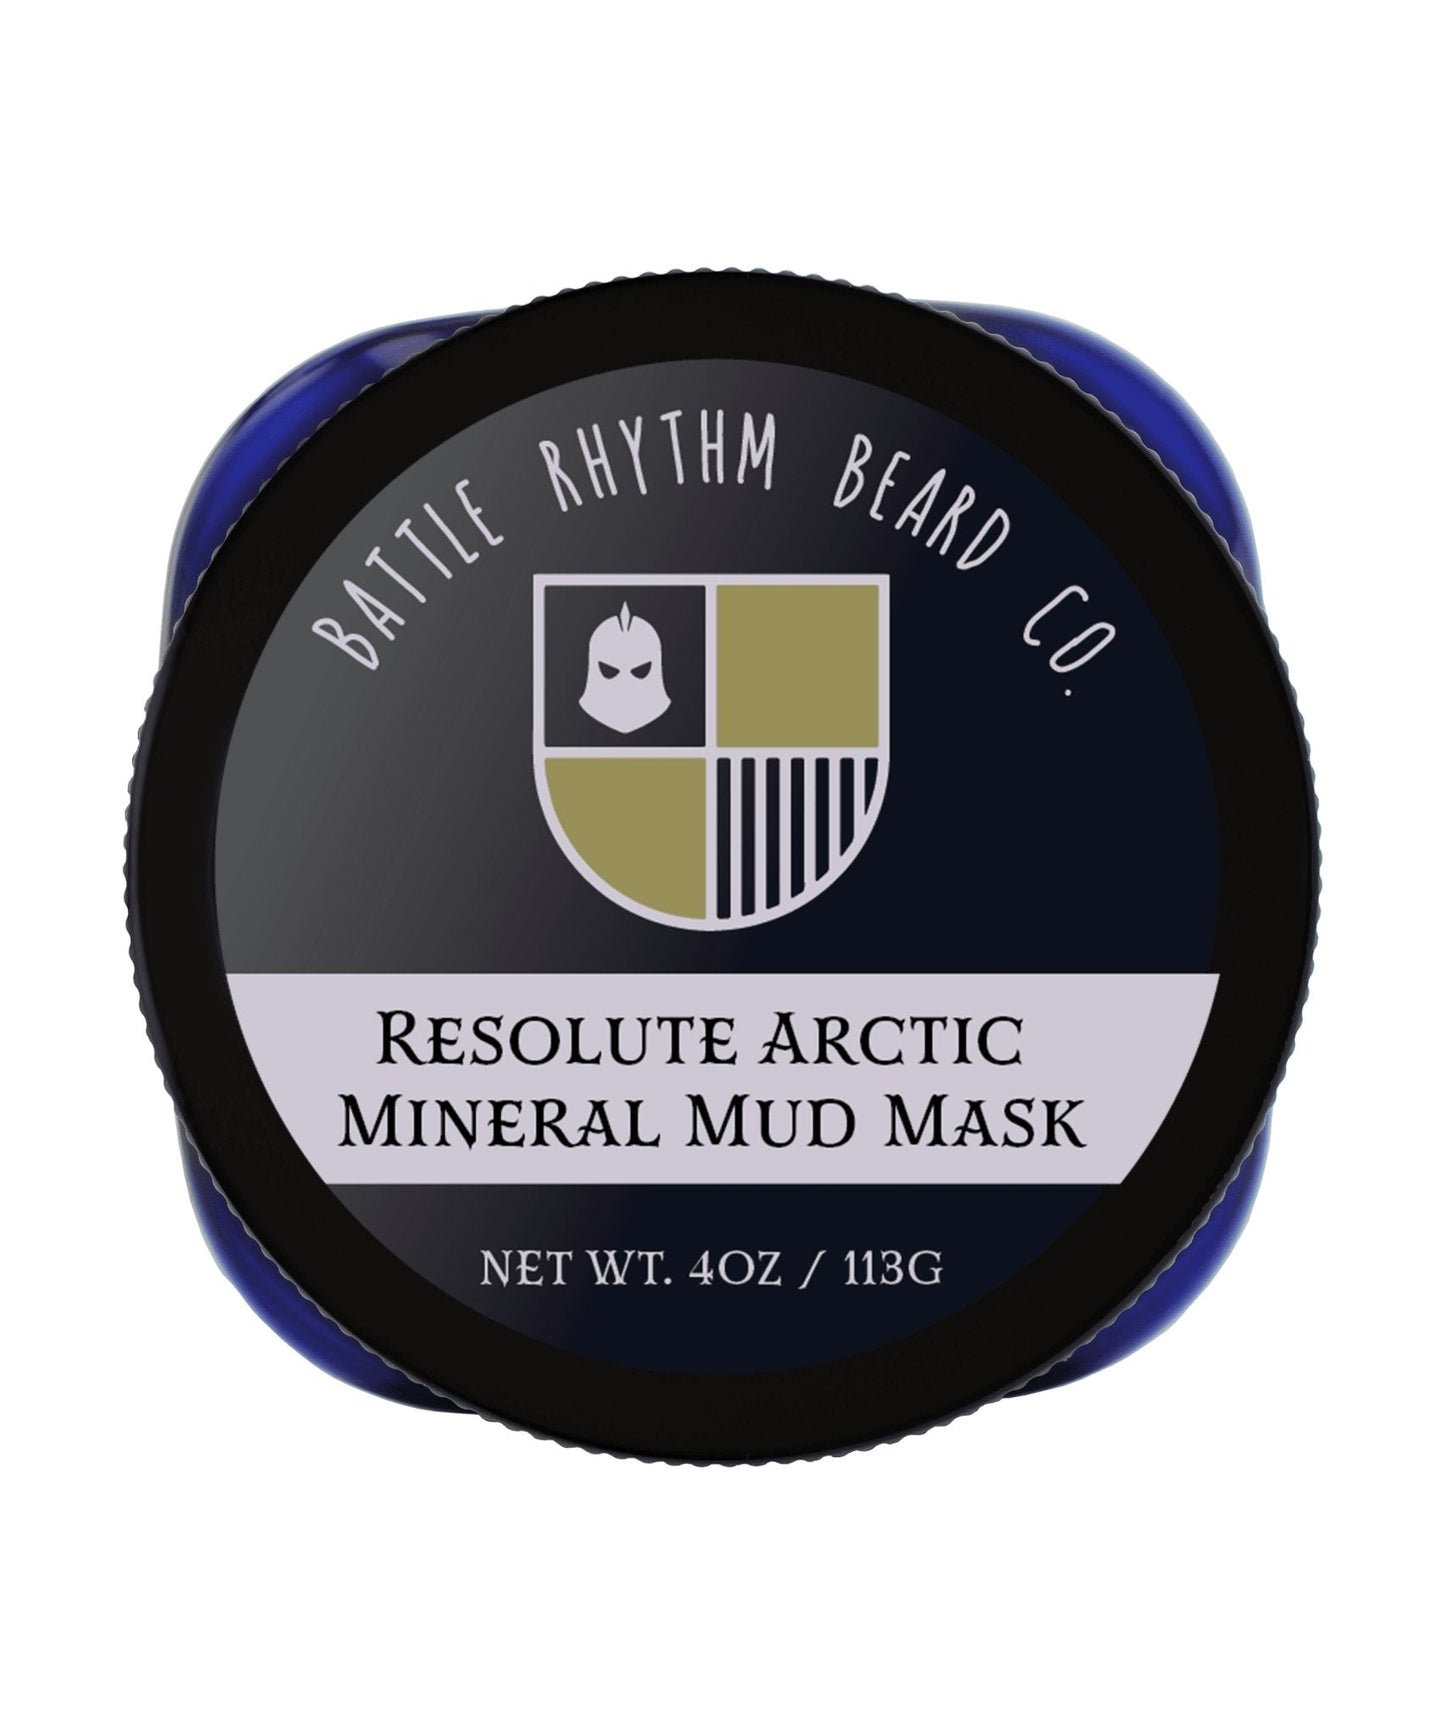 Resolute Arctic Mineral Mud Mask